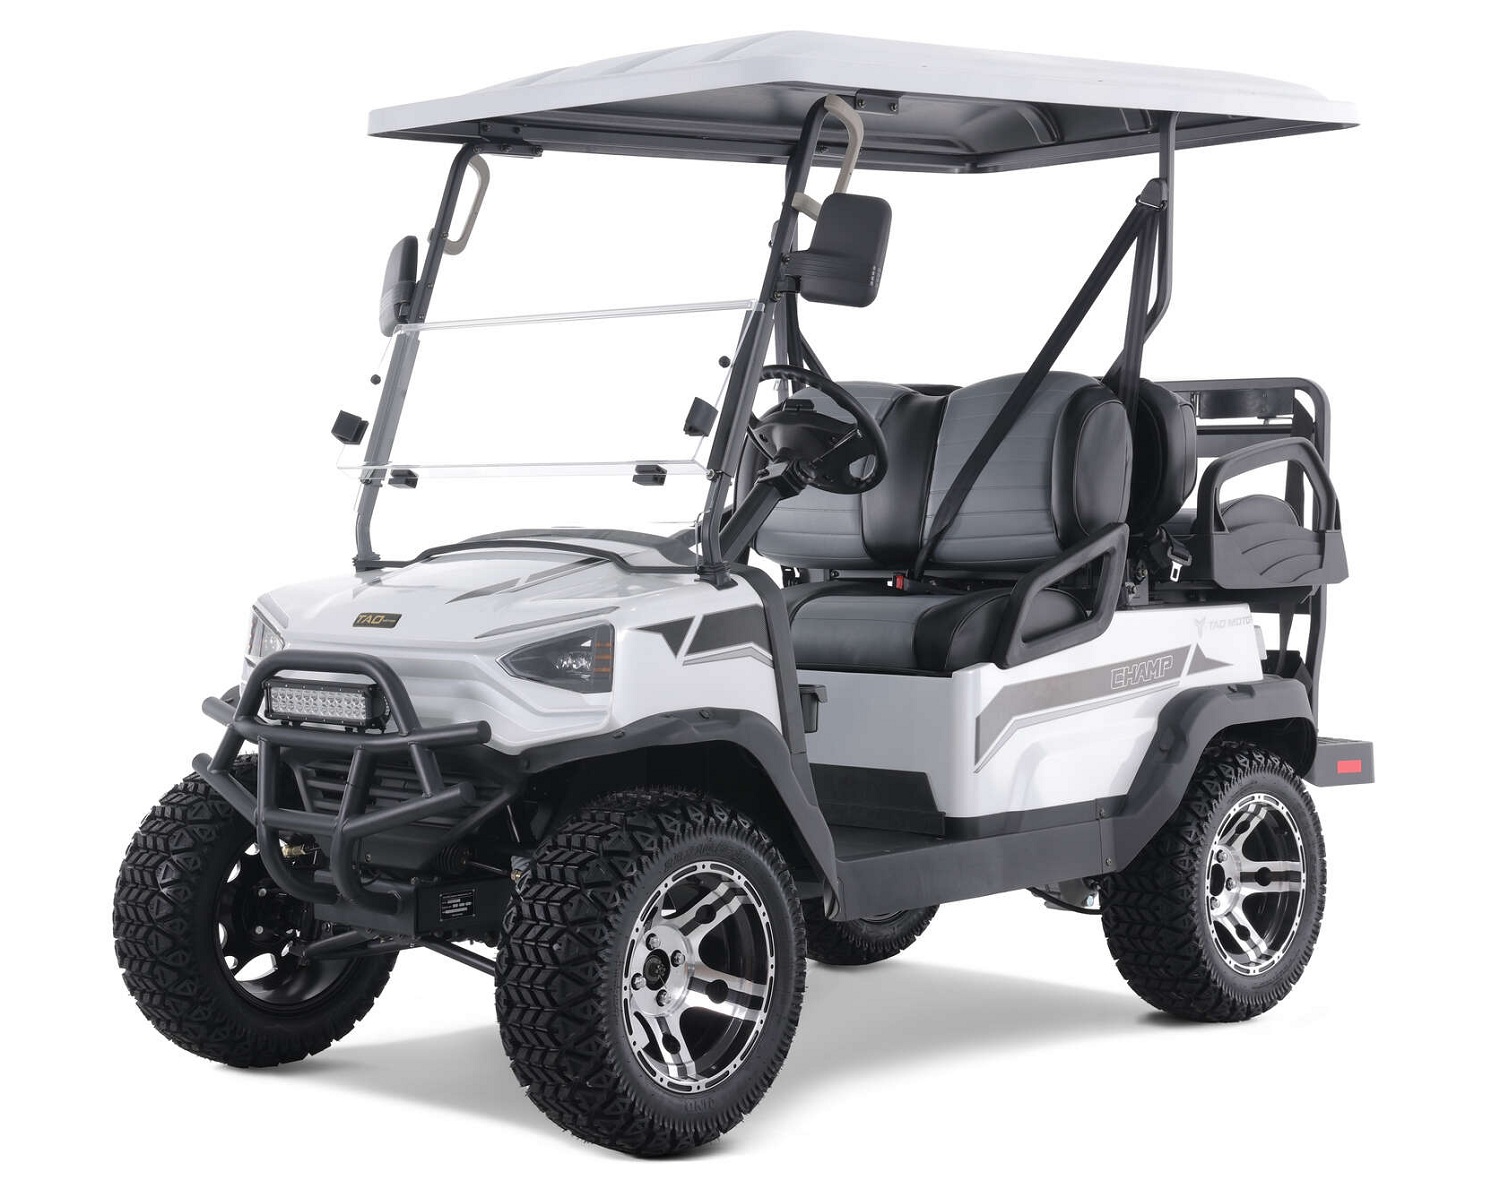 Tao Motor Champion TA 2+2 (Champ) Electric Golf Cart, Aluminum Alloy Wheels Large Colorful TFT Display - White